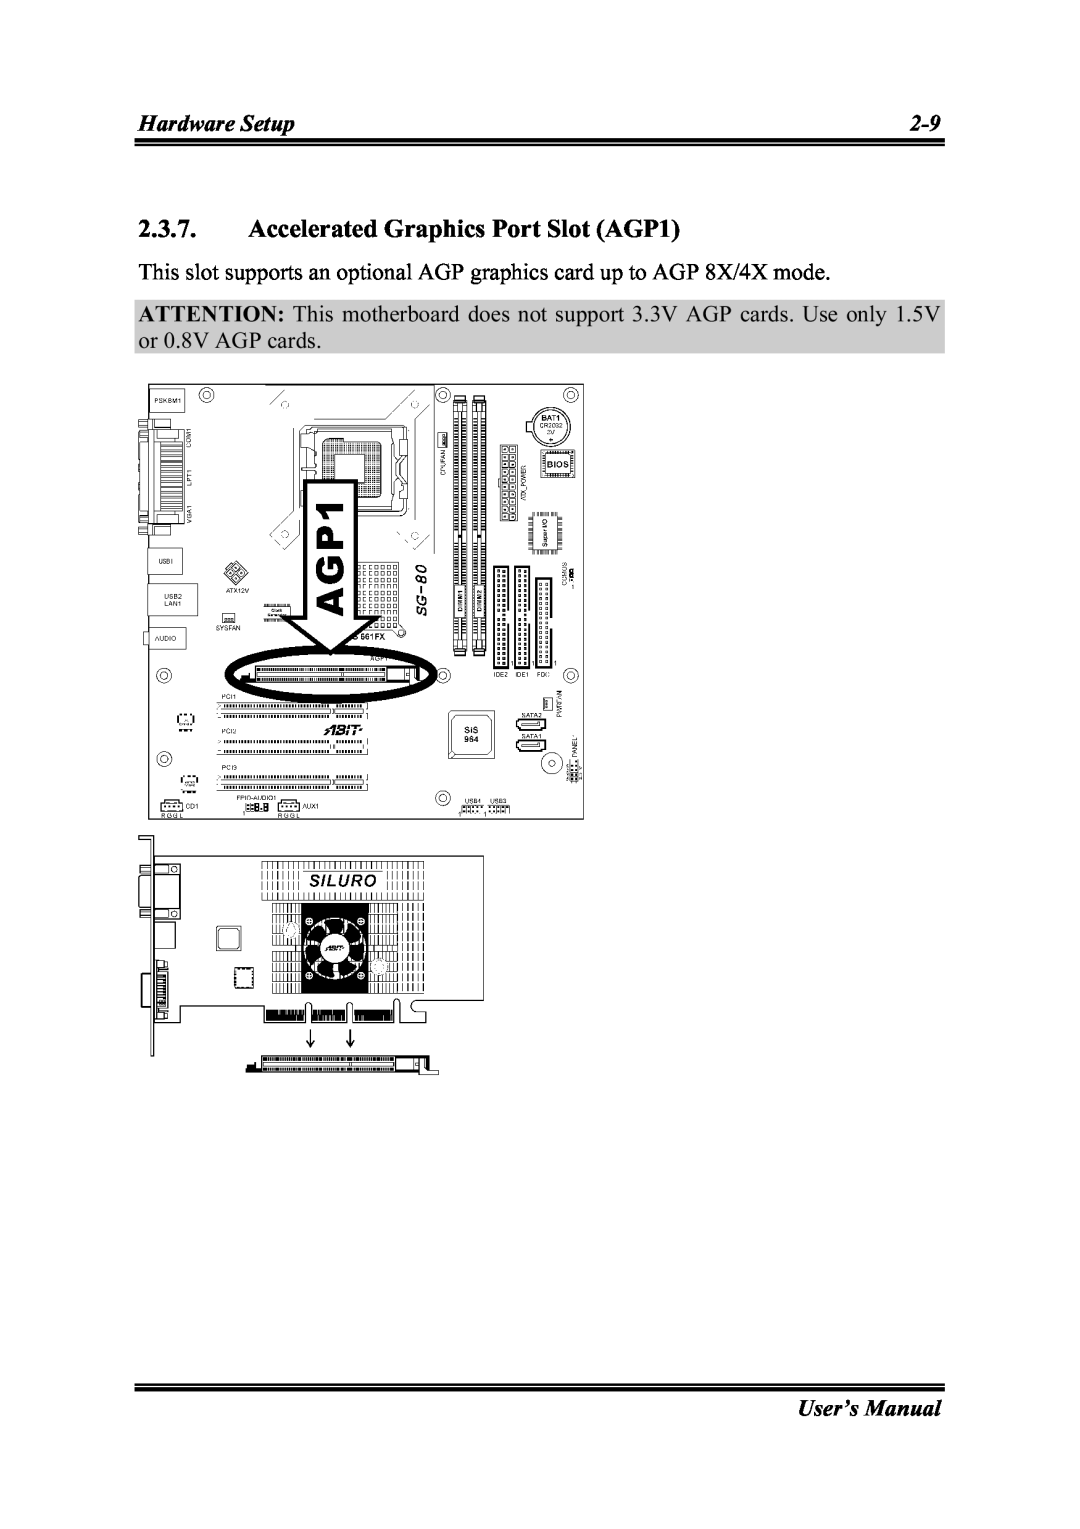 Intel SG-81, SG-80 user manual Accelerated Graphics Port Slot AGP1, Hardware Setup, User’s Manual 